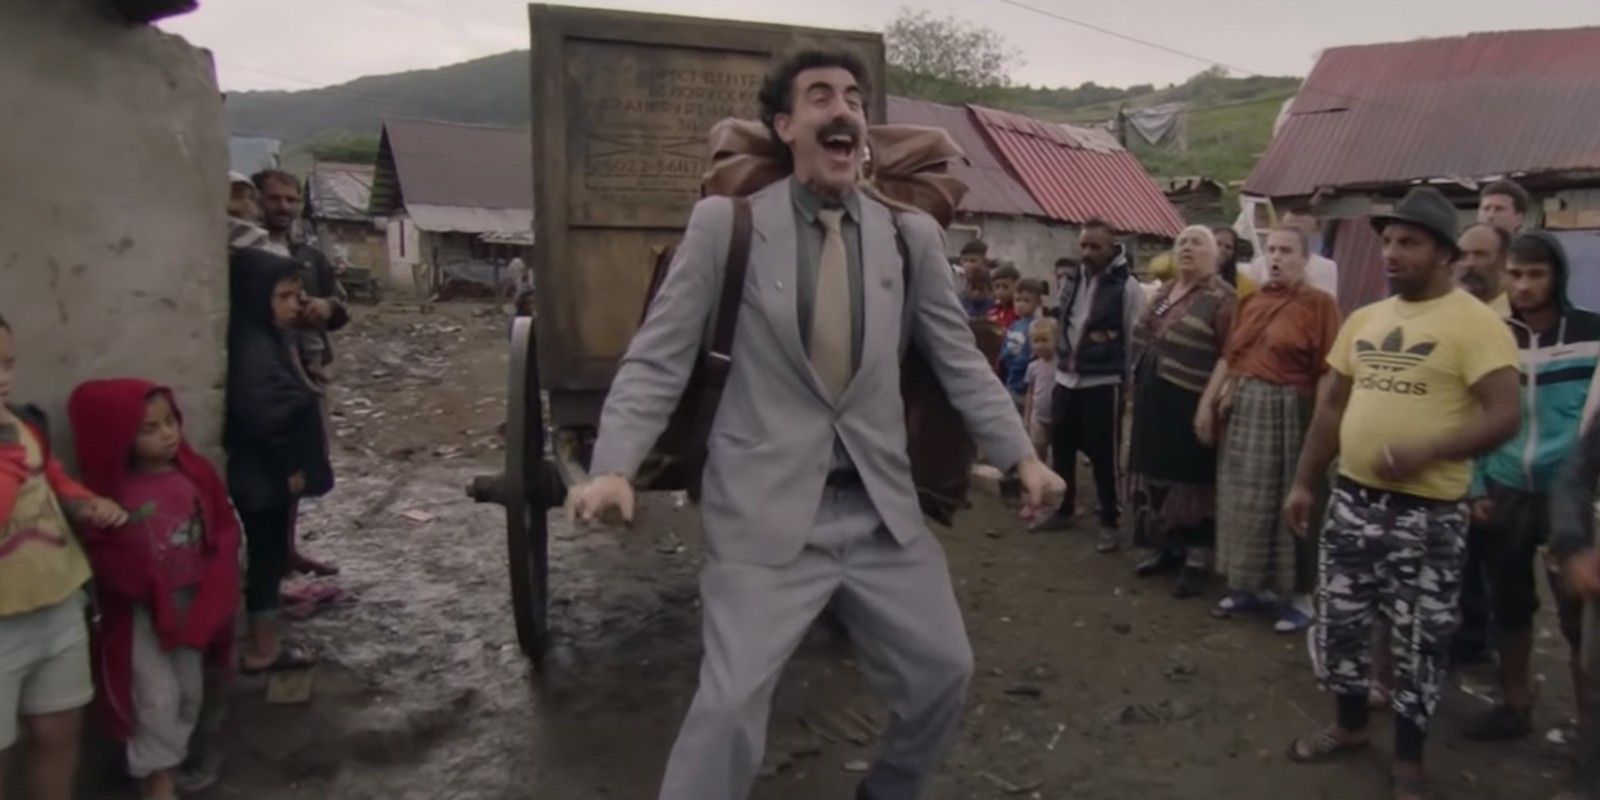 Borat smiling in a village